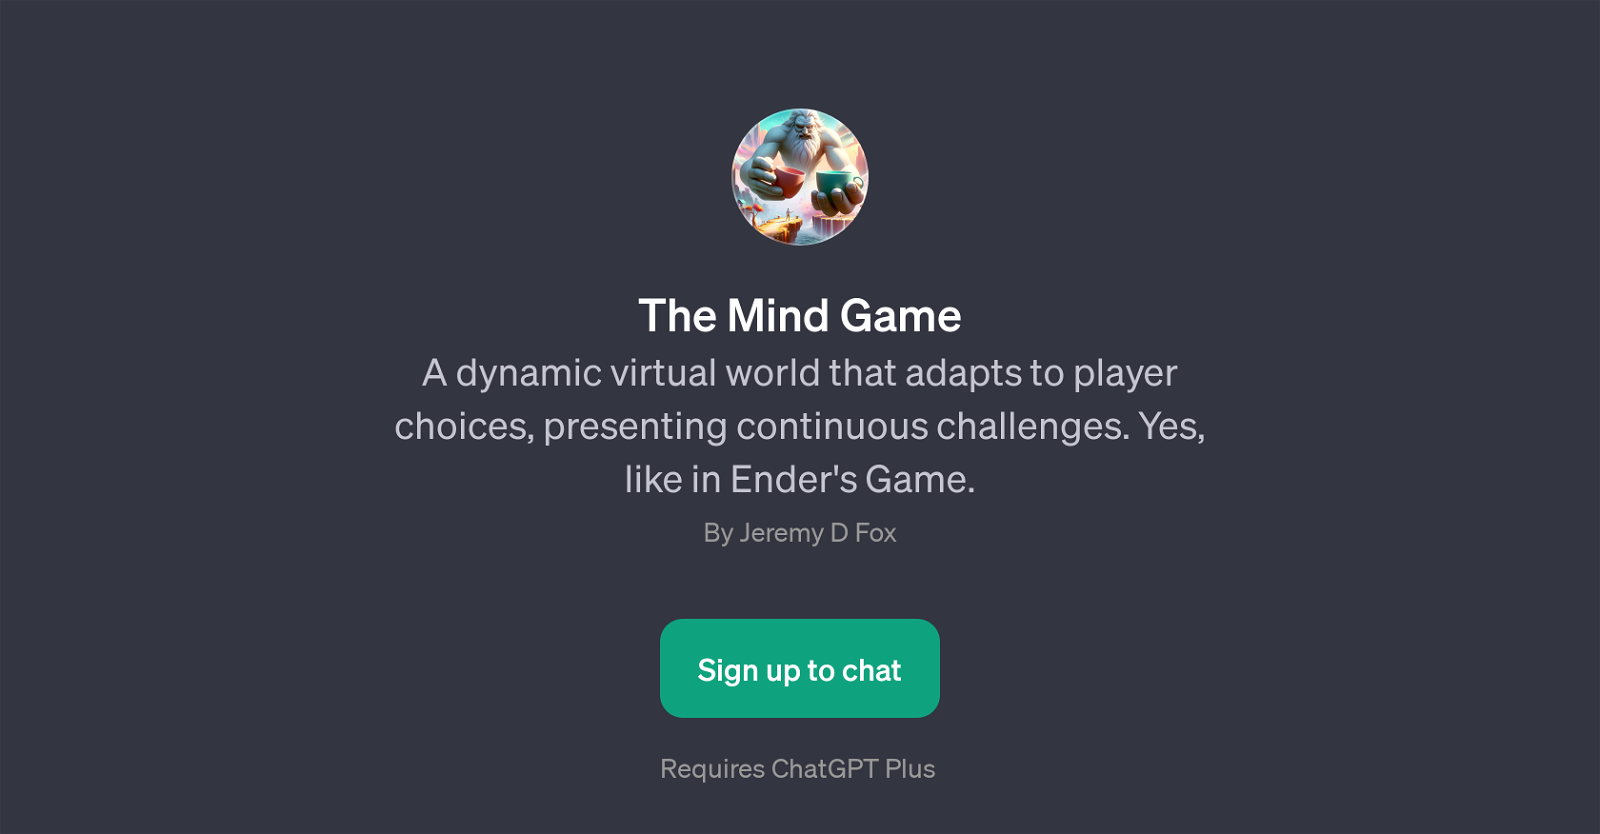 The Mind Game website